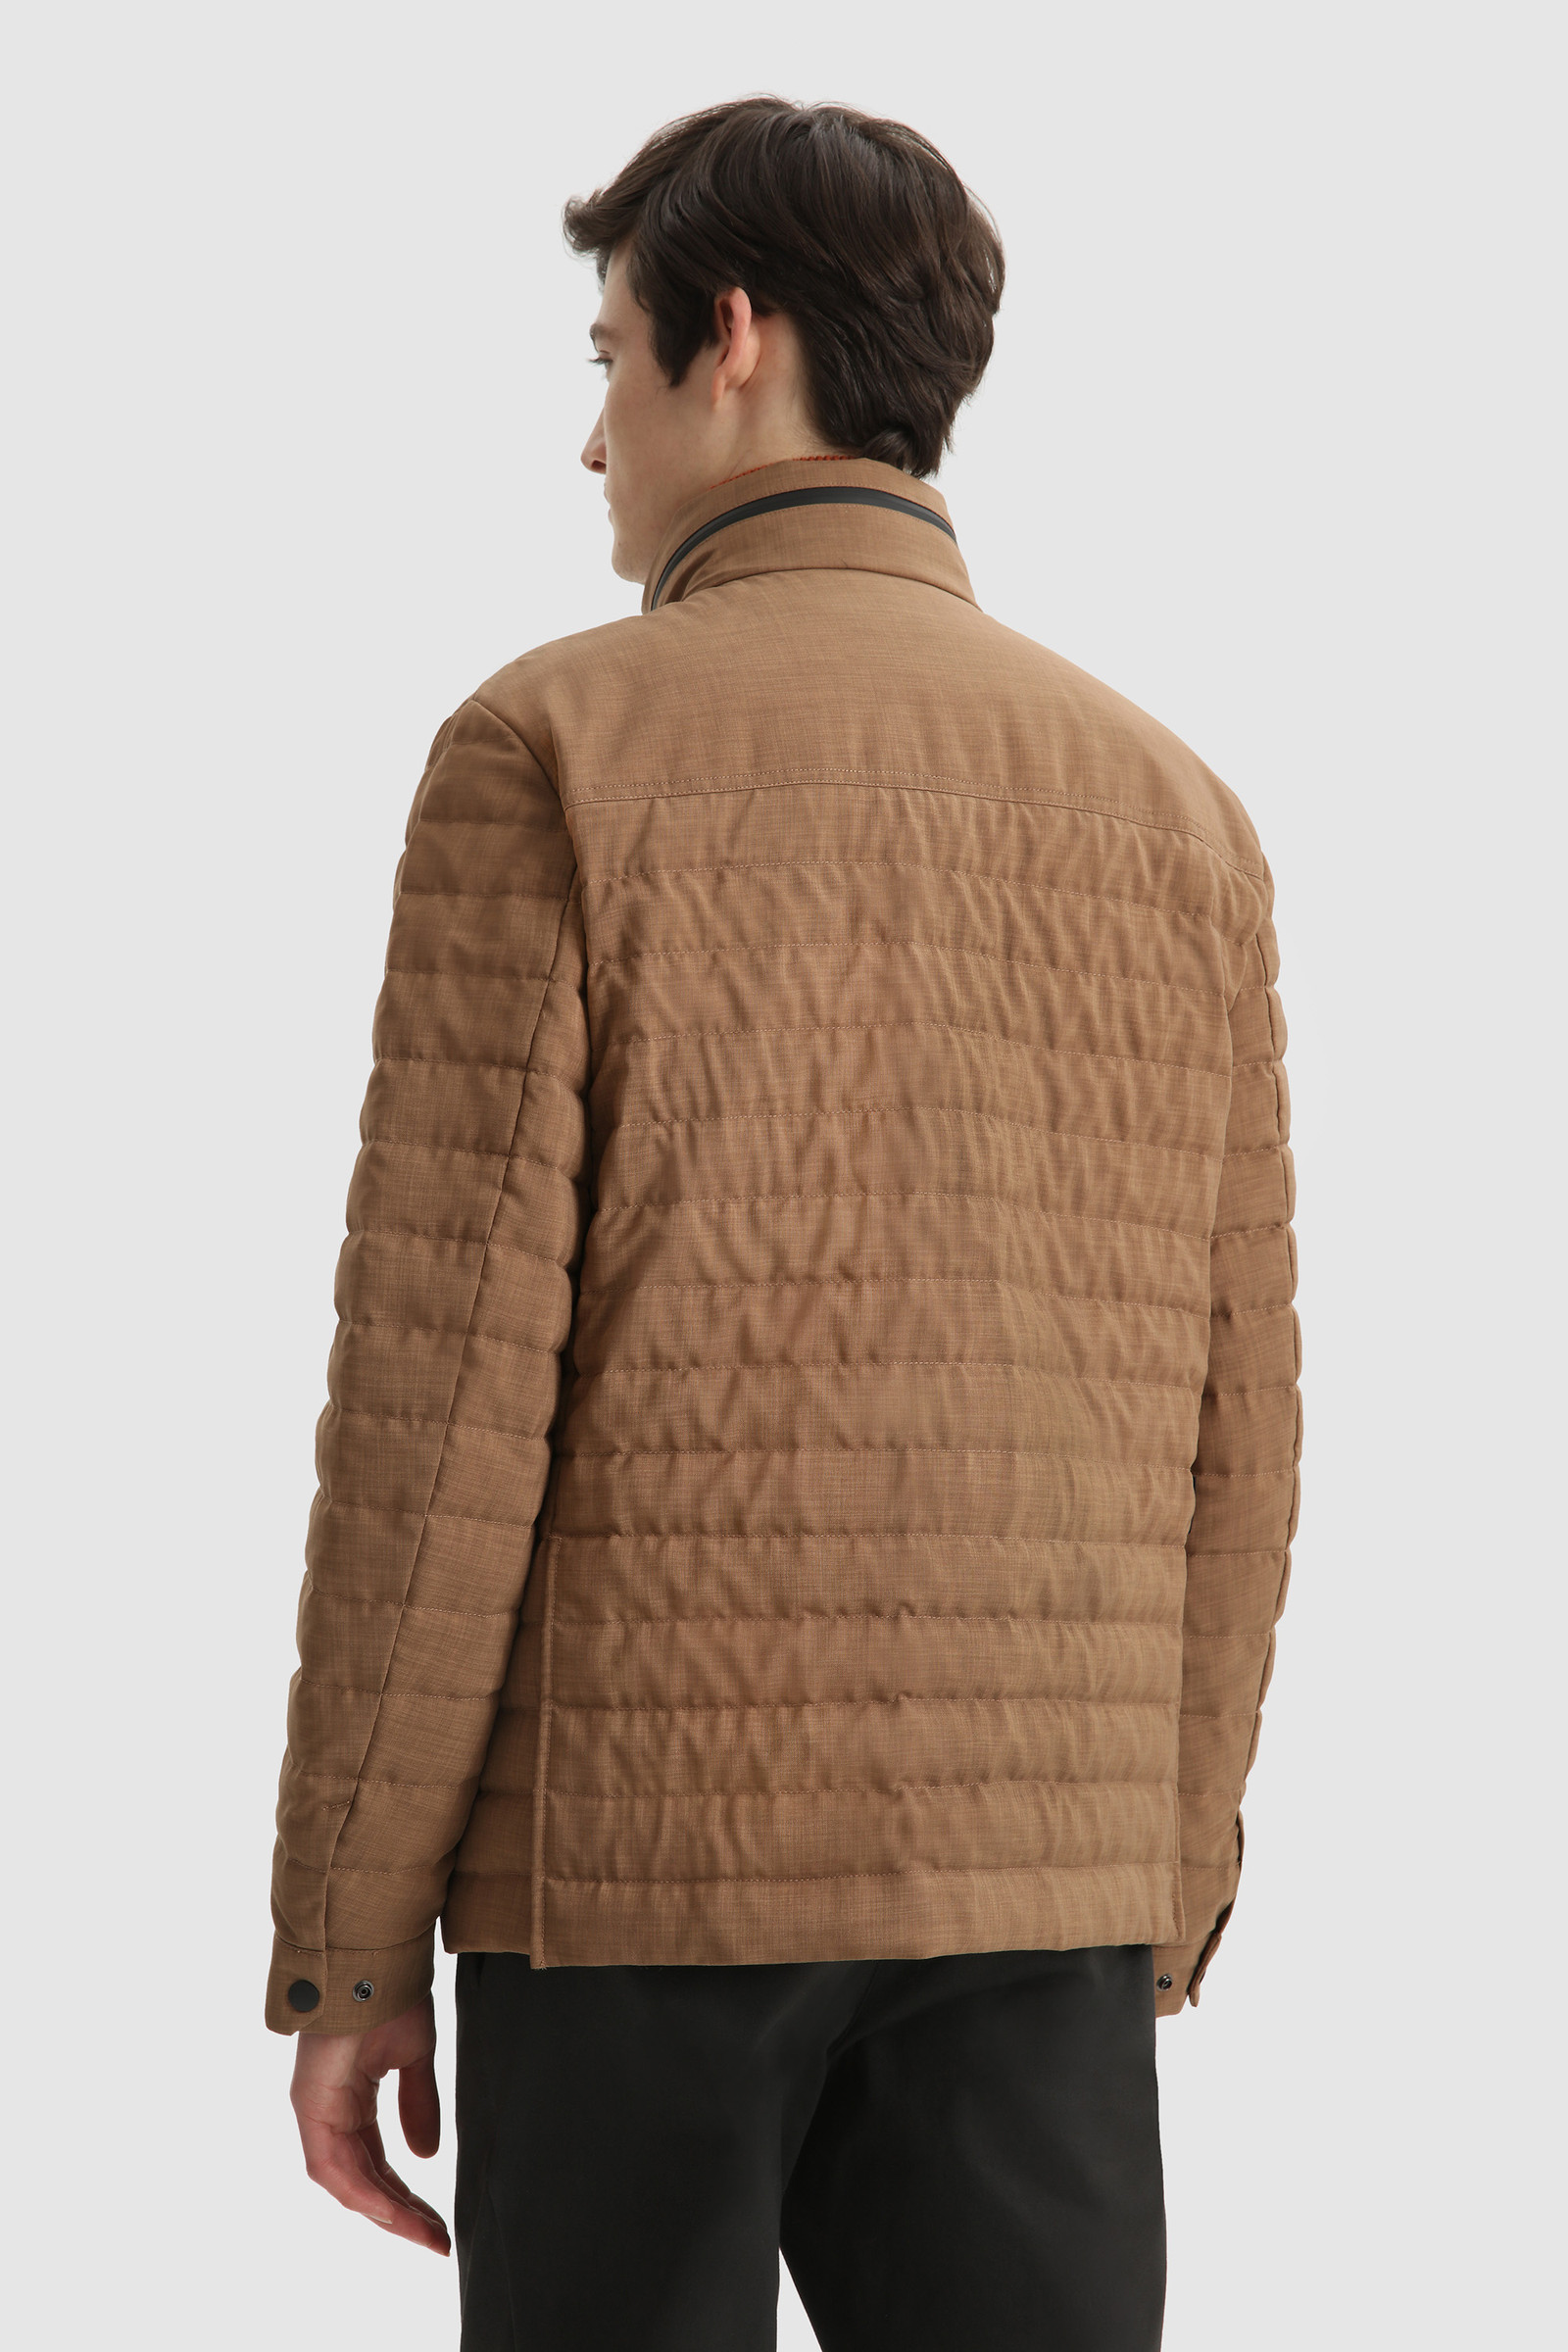 Woolrich OUTDOORWEAR Wool Jacket XL 90s